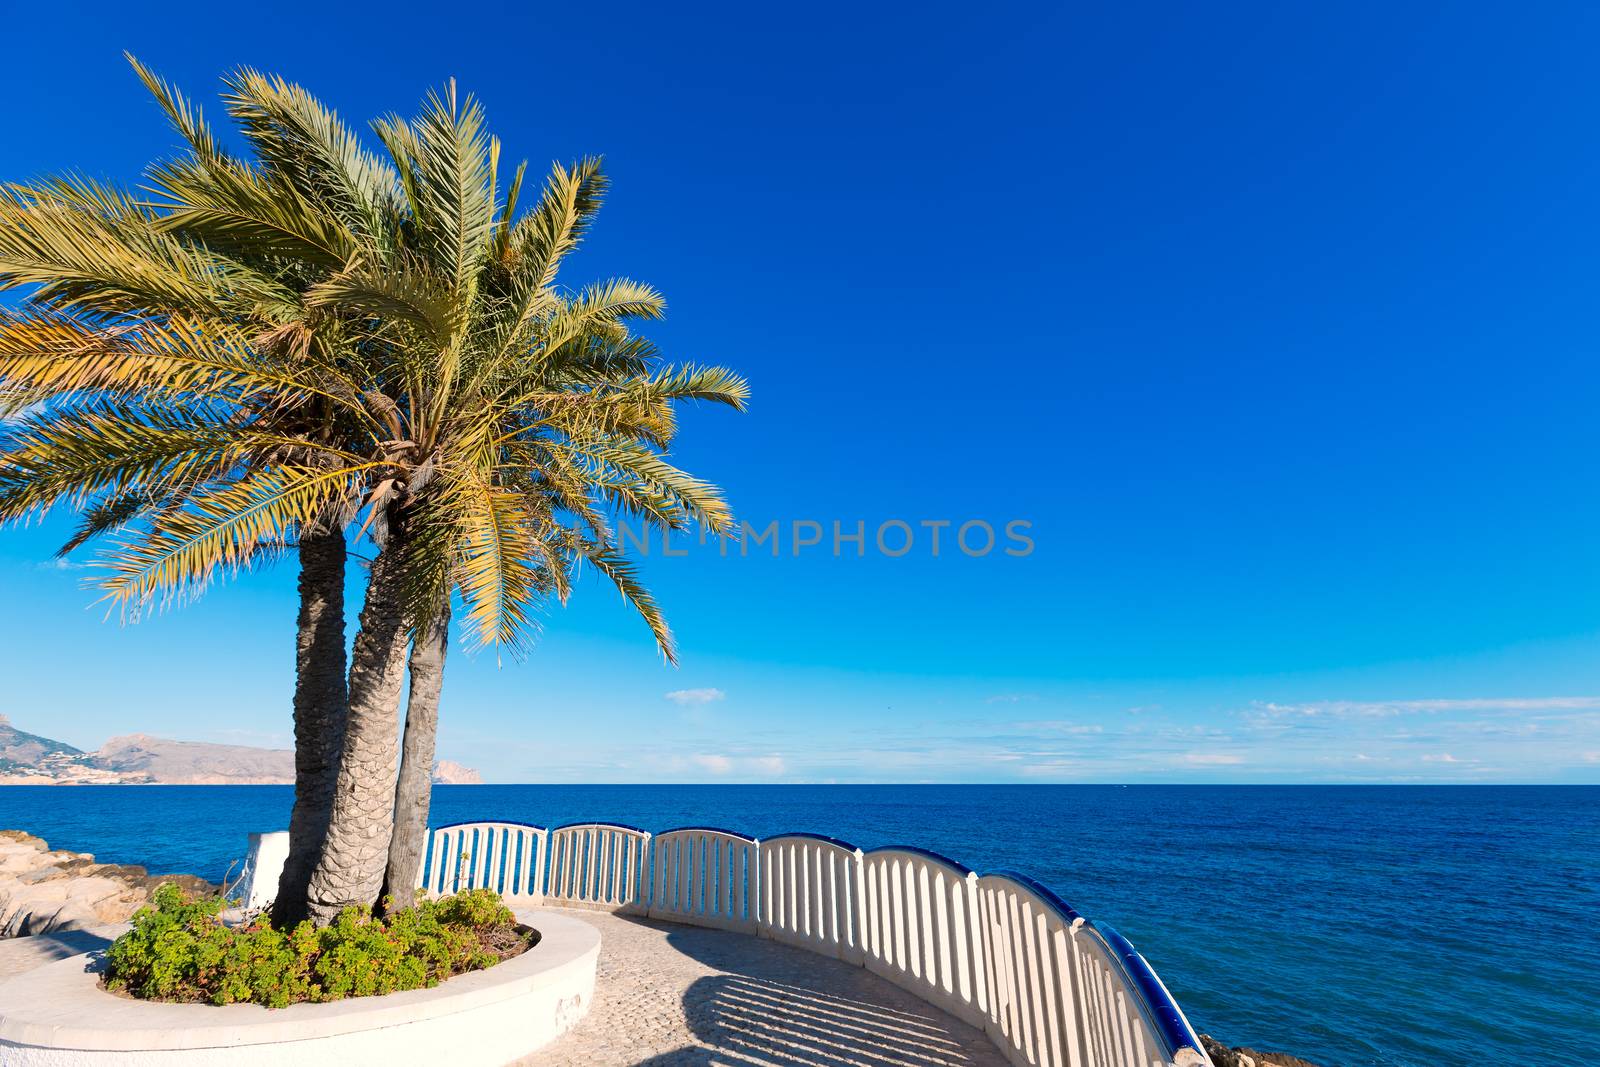 Altea beach balconade typical white Mediterranean village Alicante of Spain